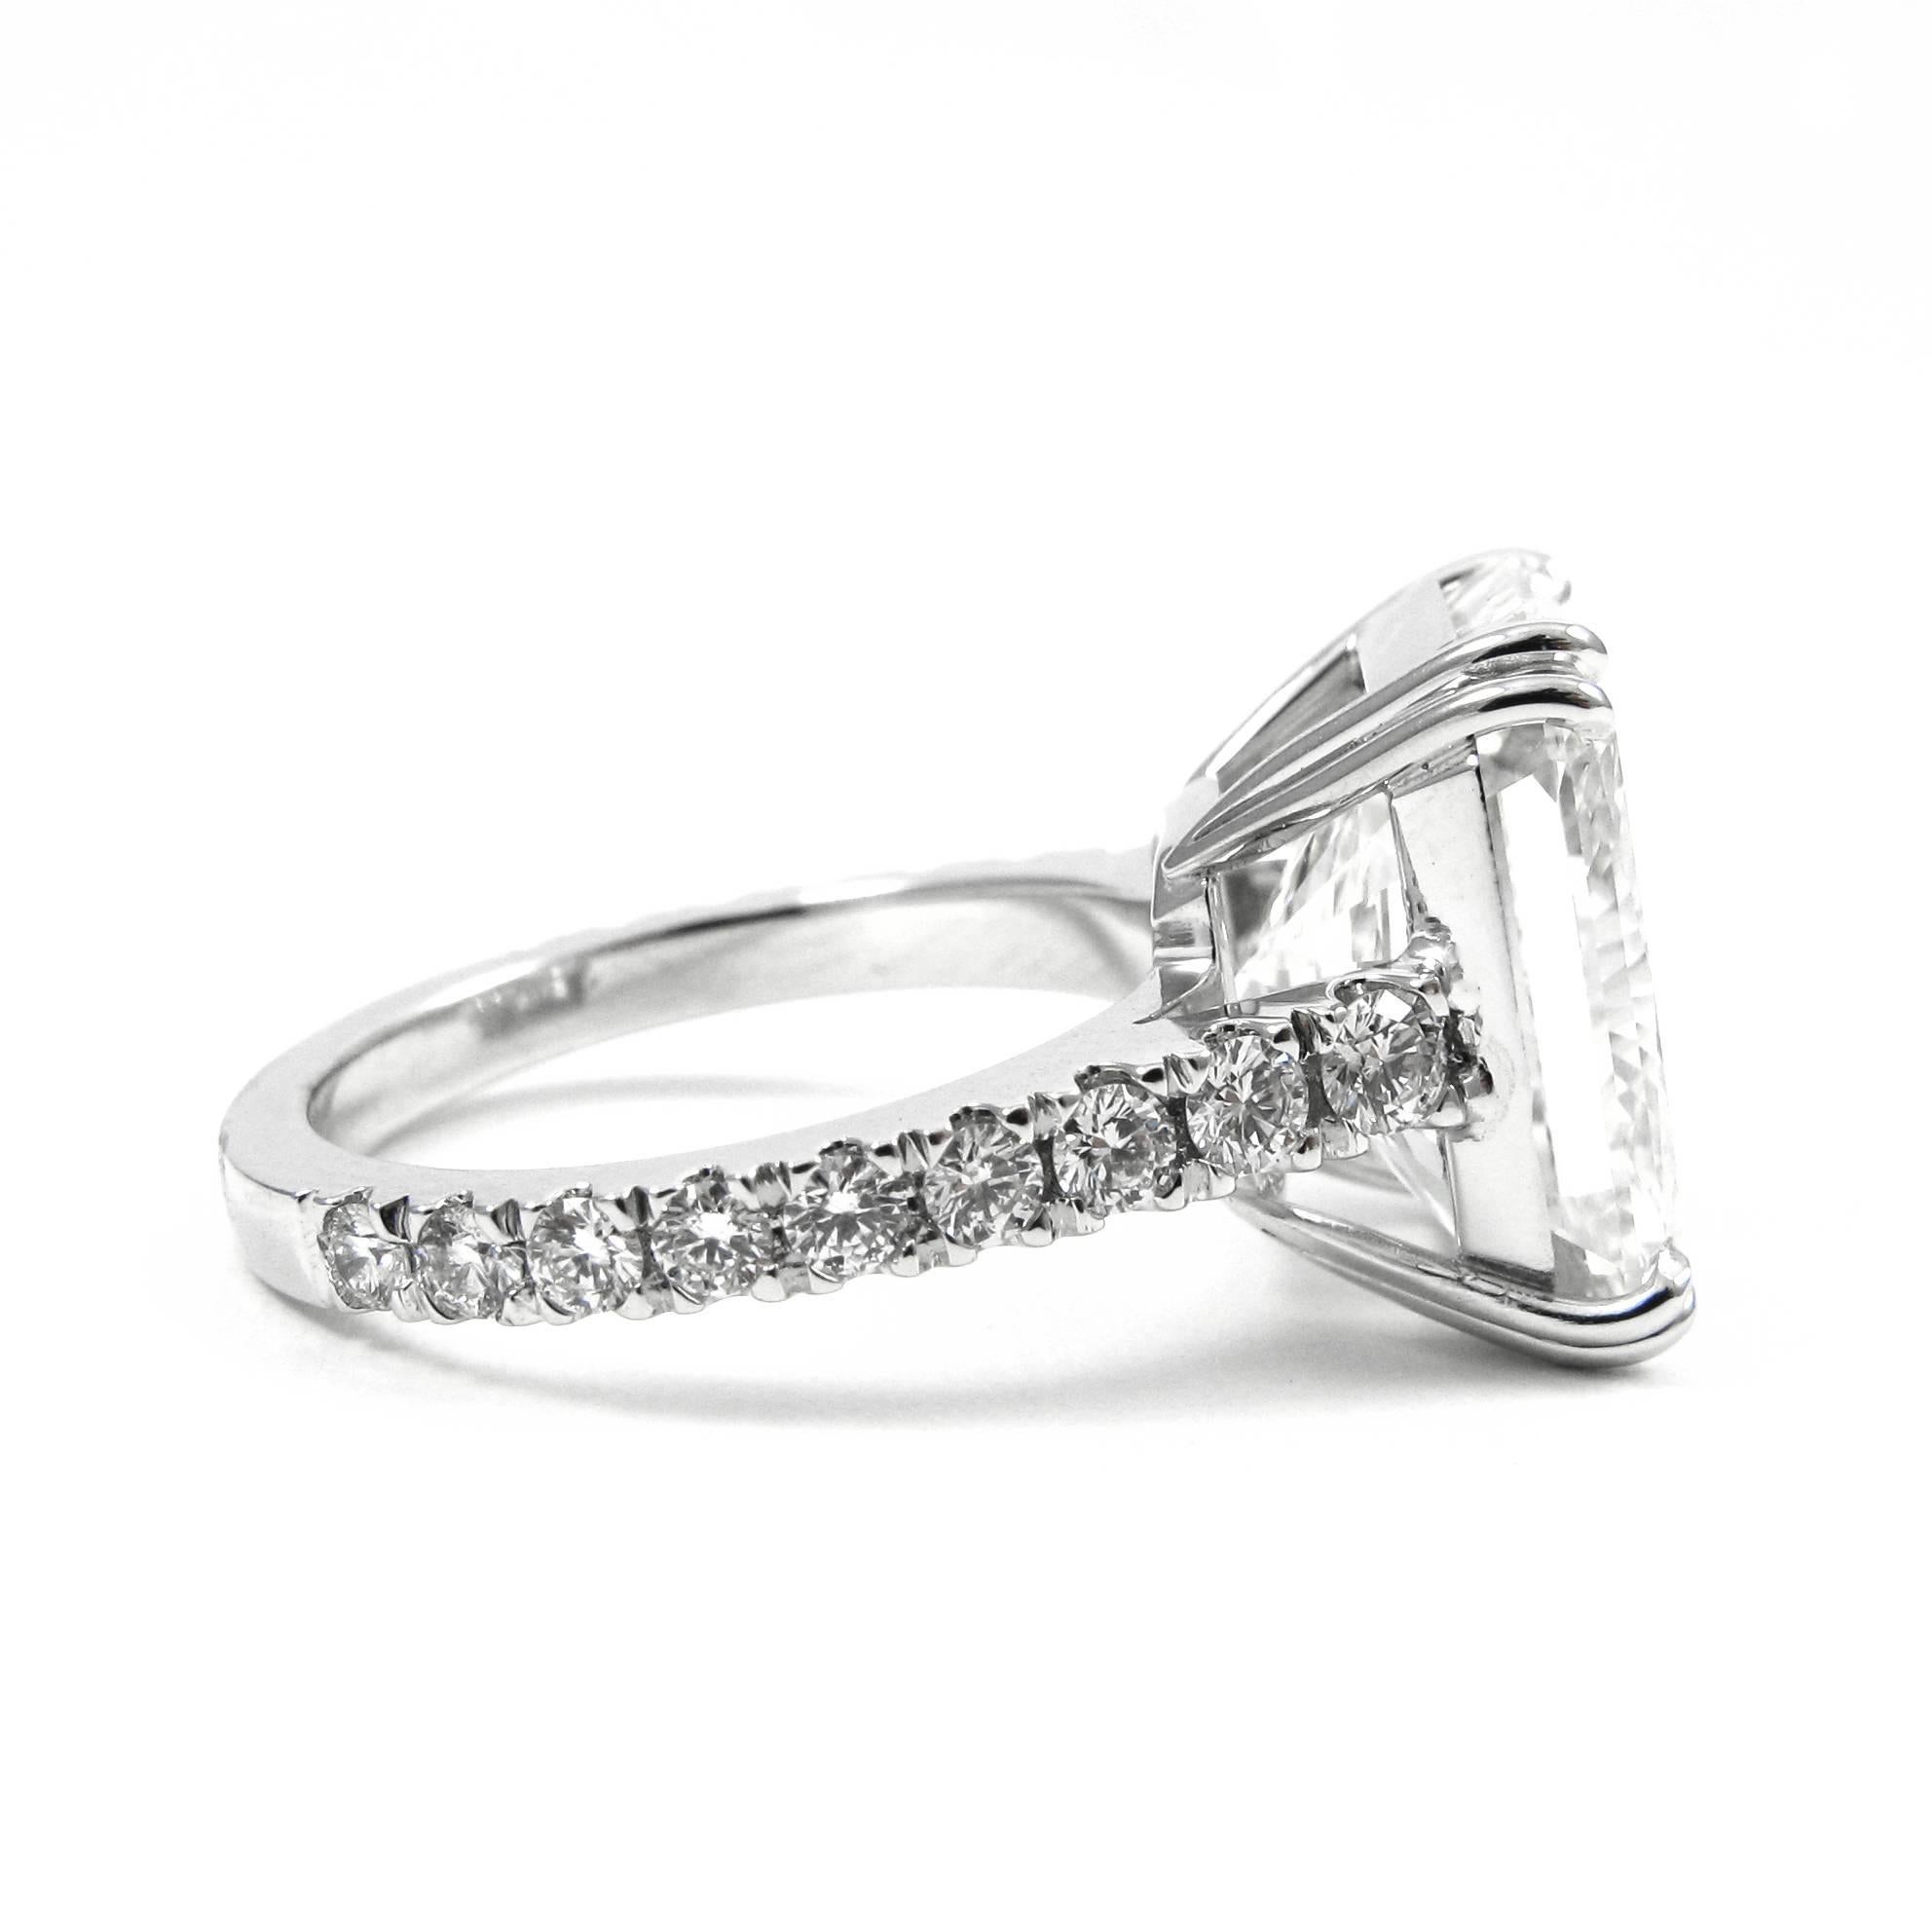 4 carat radiant cut diamond ring